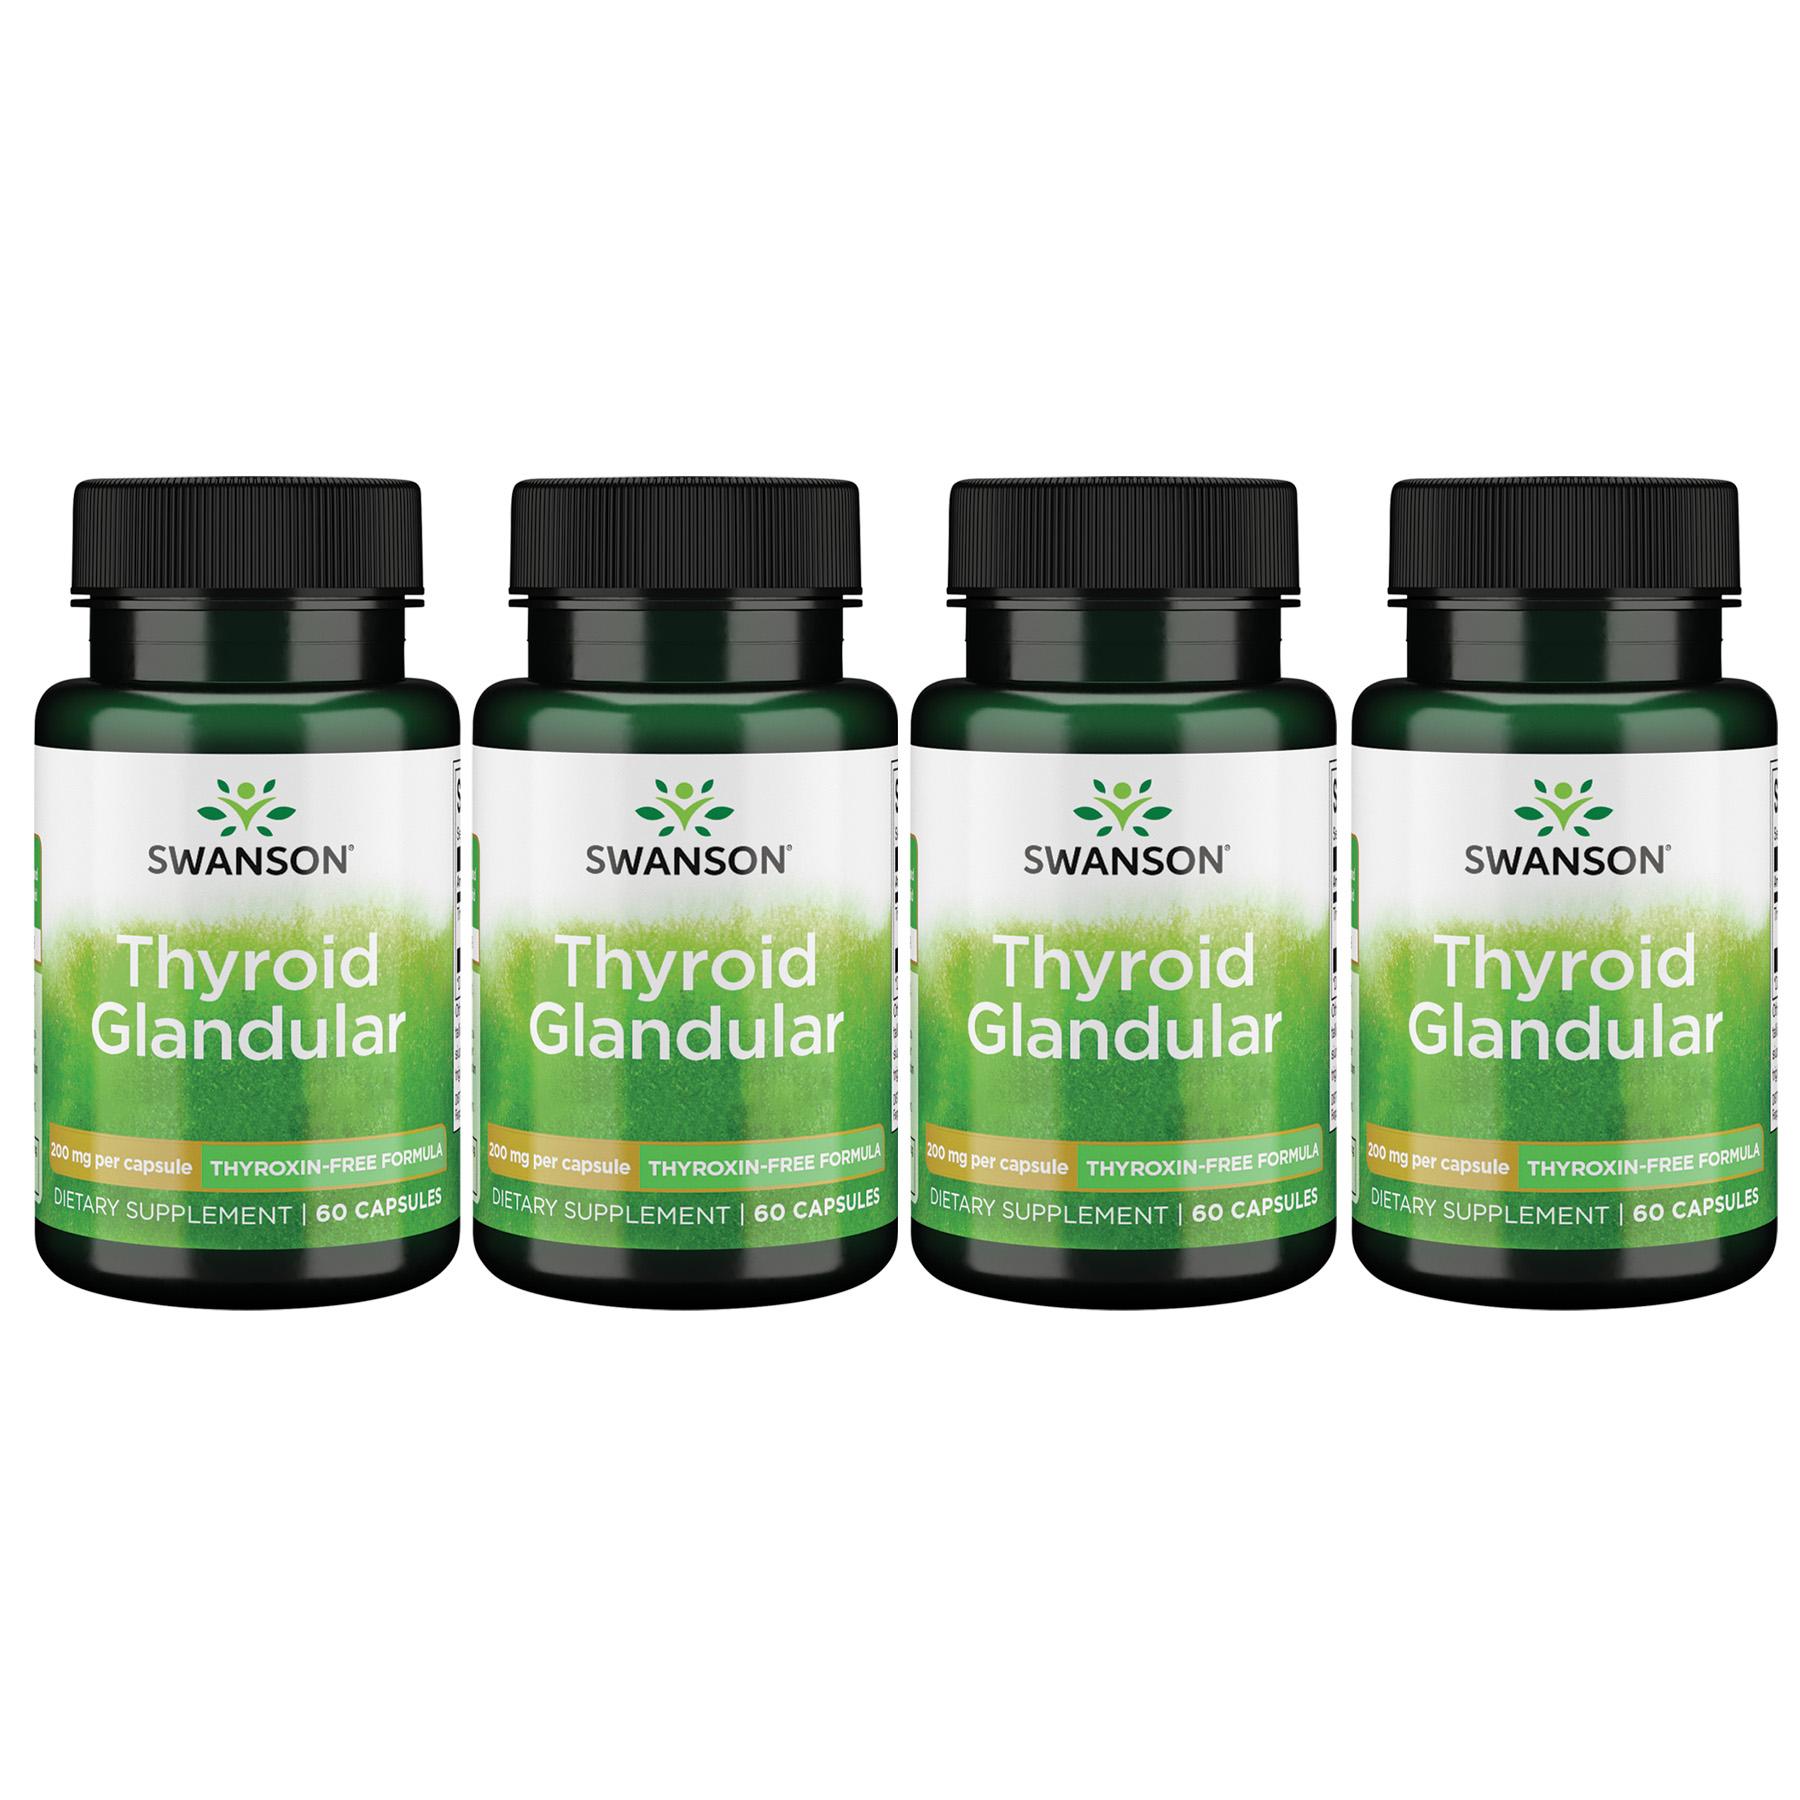 Swanson Premium Thyroid Glandular - Thyroxin-Free Formula 4 Pack Supplement Vitamin 200 mg 60 Caps